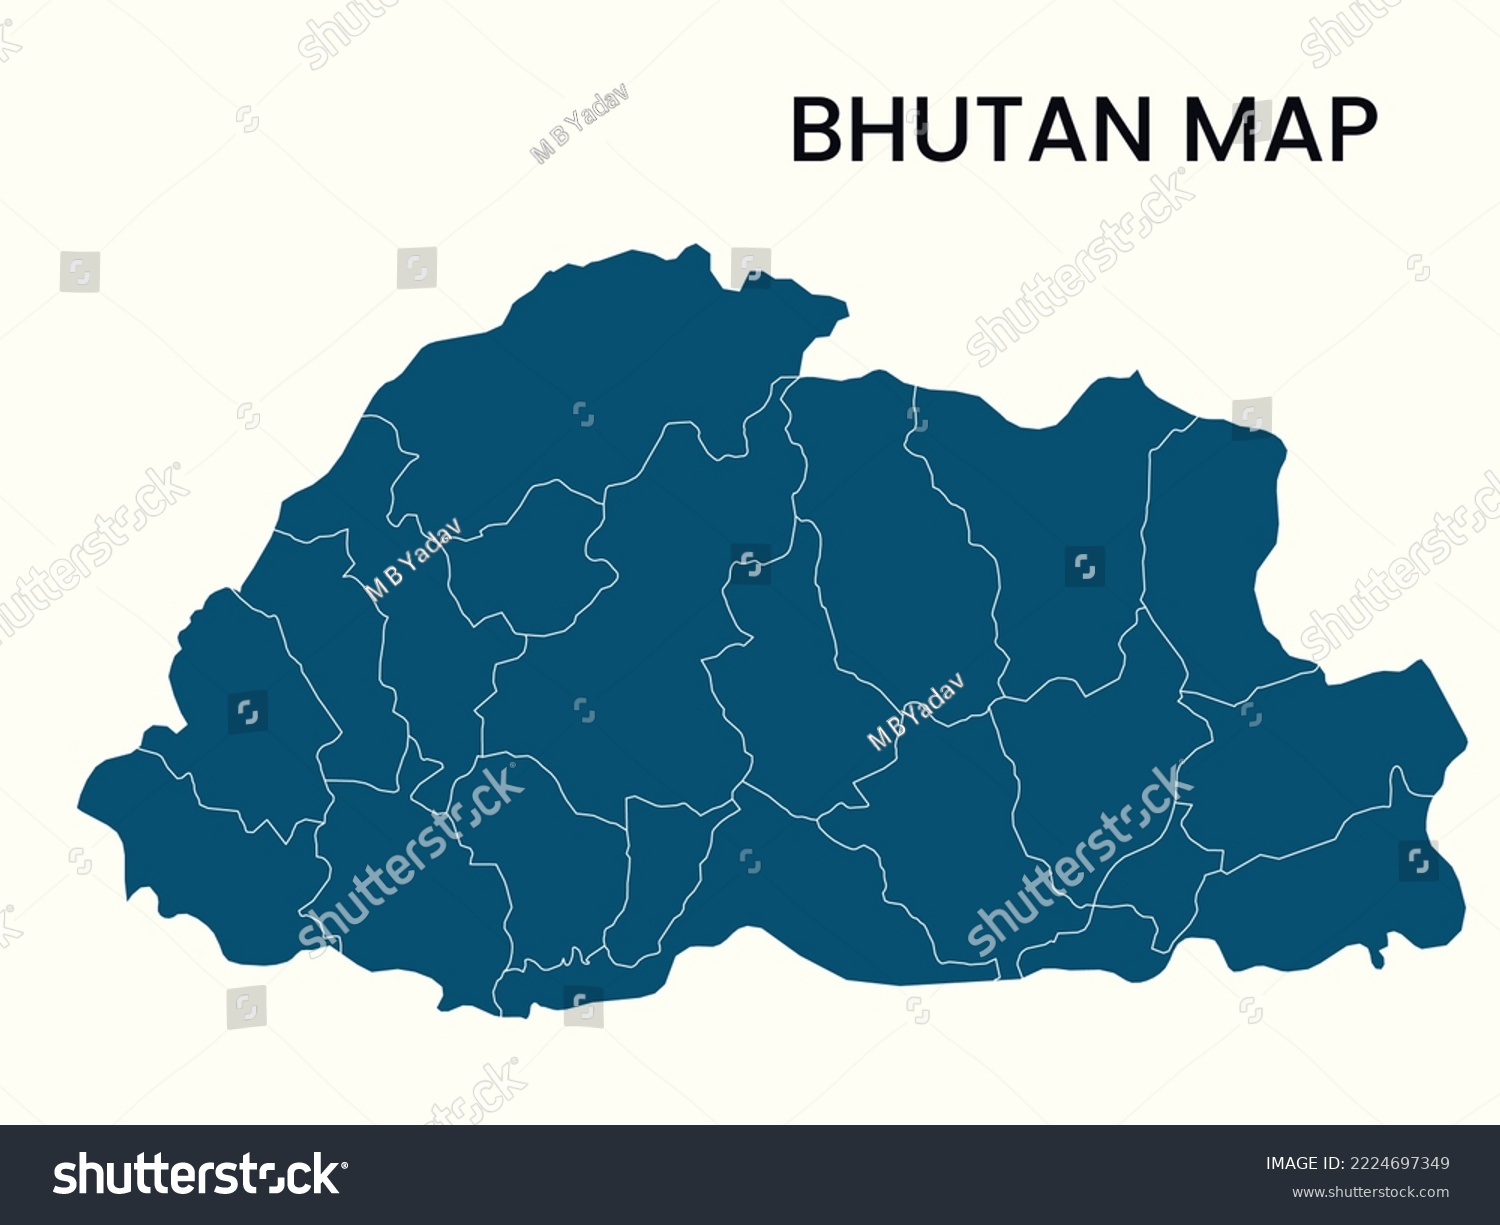 Map of Bhutan, Solid Map of Bhutan, Bhutan - Royalty Free Stock Vector ...